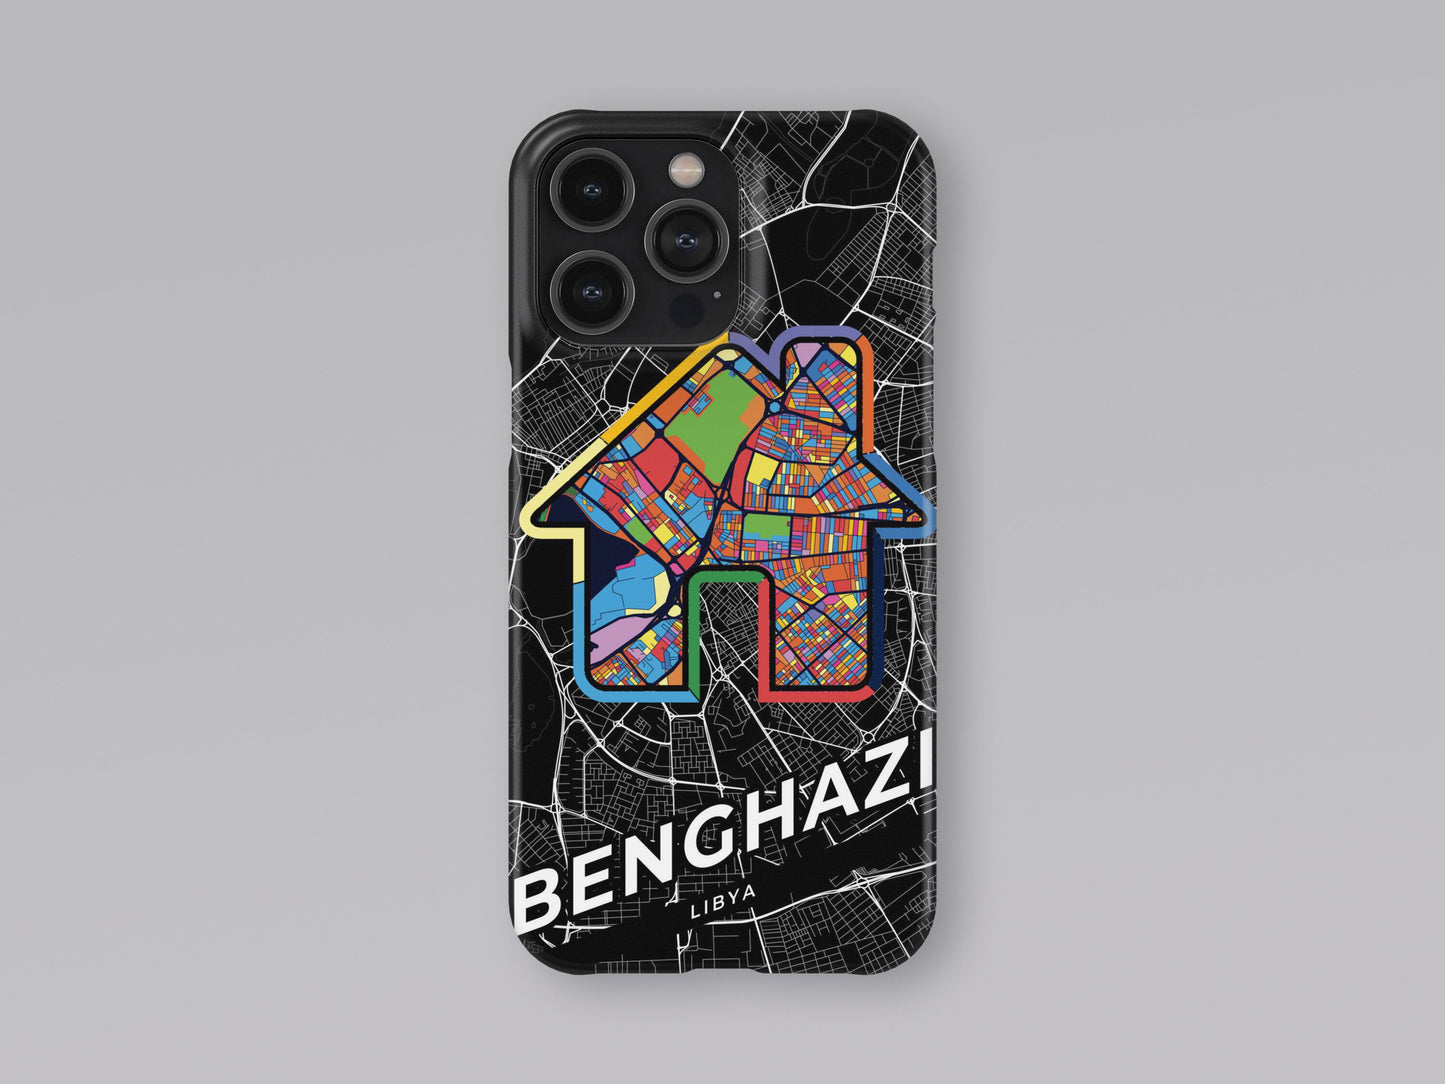 Benghazi Libya slim phone case with colorful icon. Birthday, wedding or housewarming gift. Couple match cases. 3